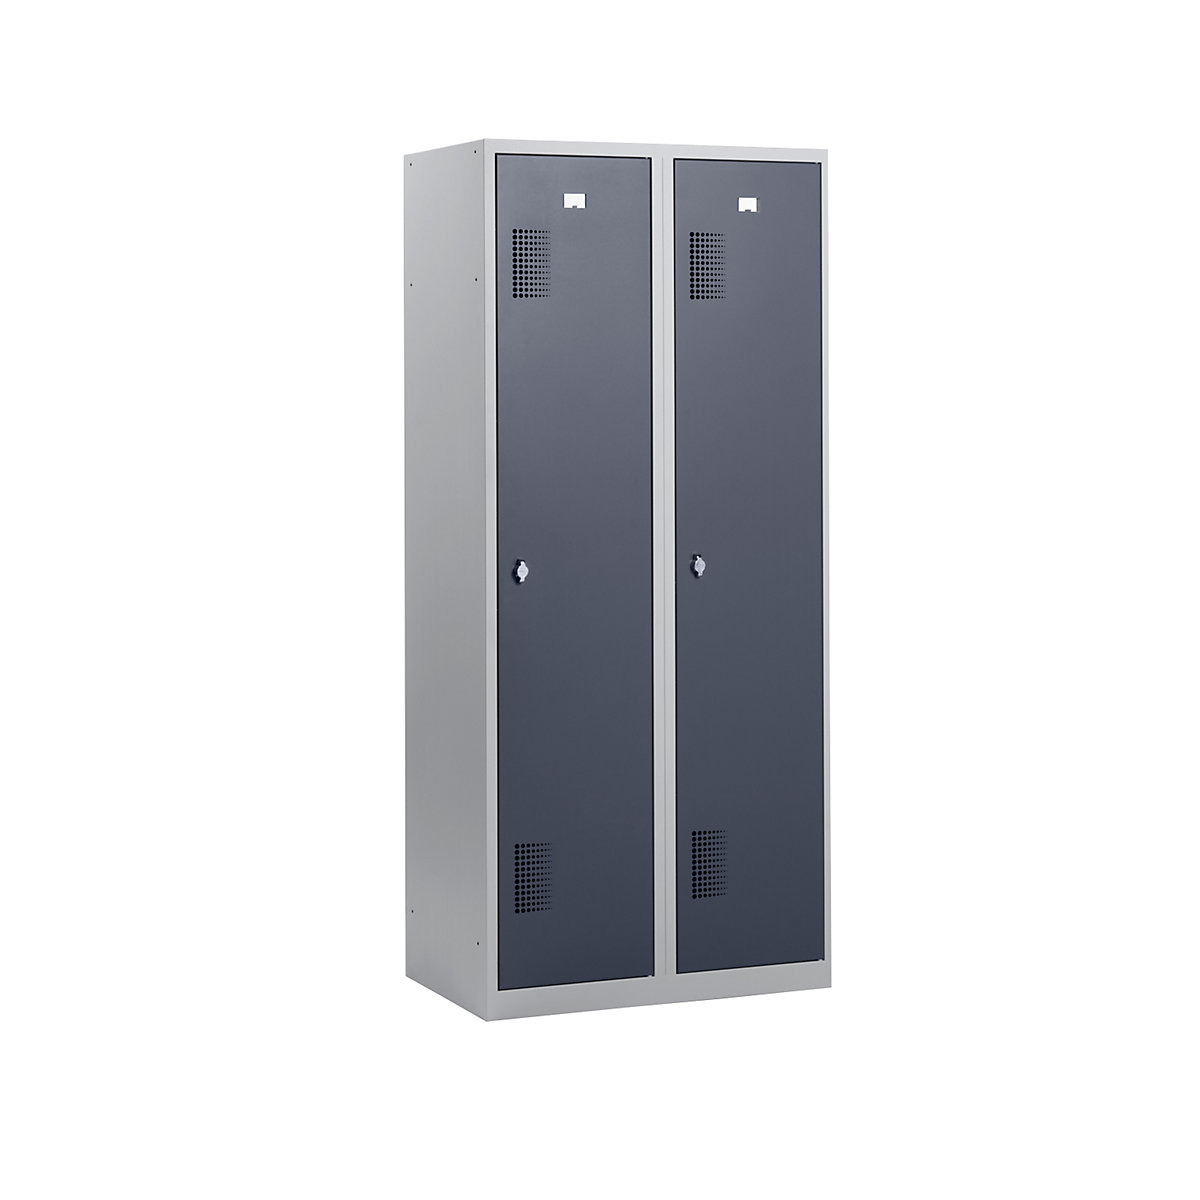 AMSTERDAM cloakroom locker – eurokraft basic, height 1800 mm, width 800 mm, 2 x 398 mm wide compartments, with fittings for padlock, light grey body / basalt grey doors-22